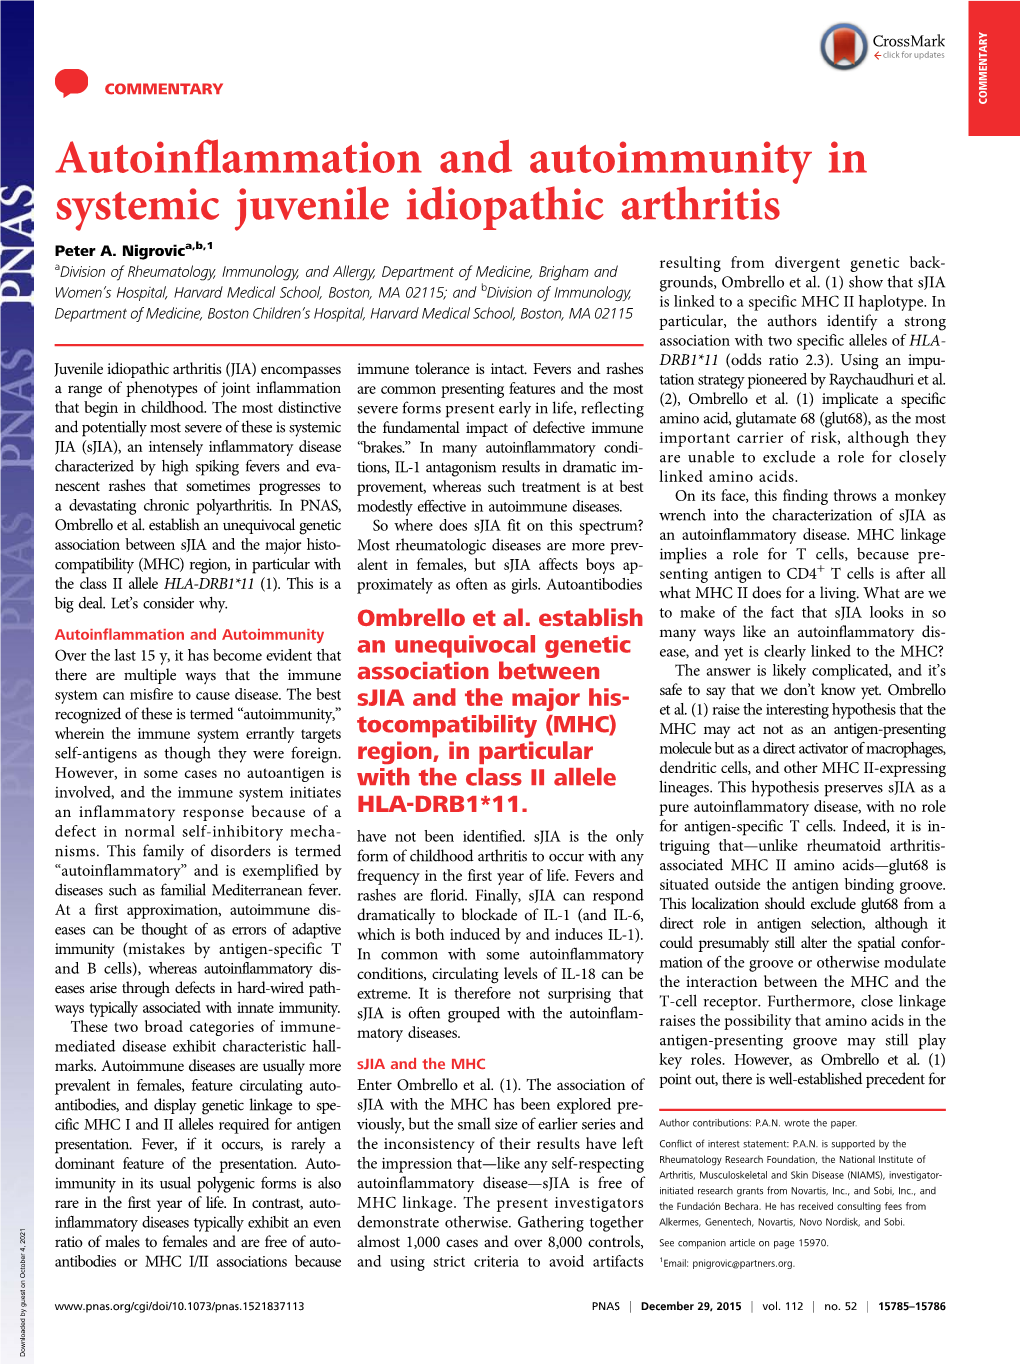 Autoinflammation and Autoimmunity in Systemic Juvenile Idiopathic Arthritis